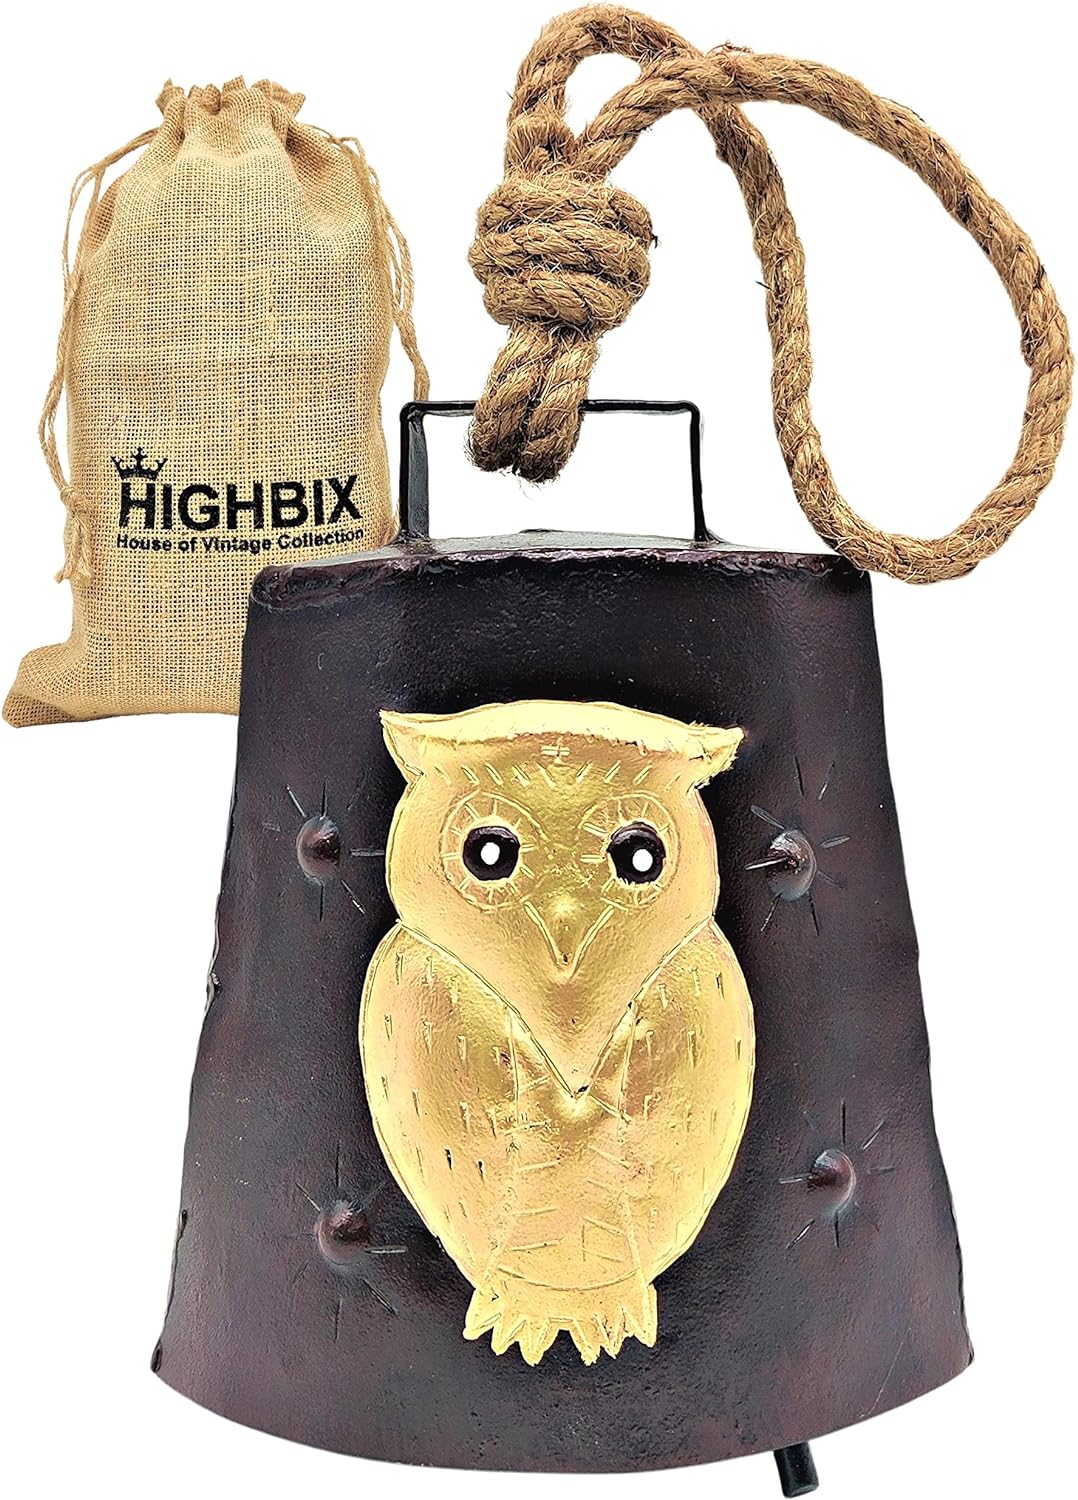 Rustic Harmony Owl Hanging Bell